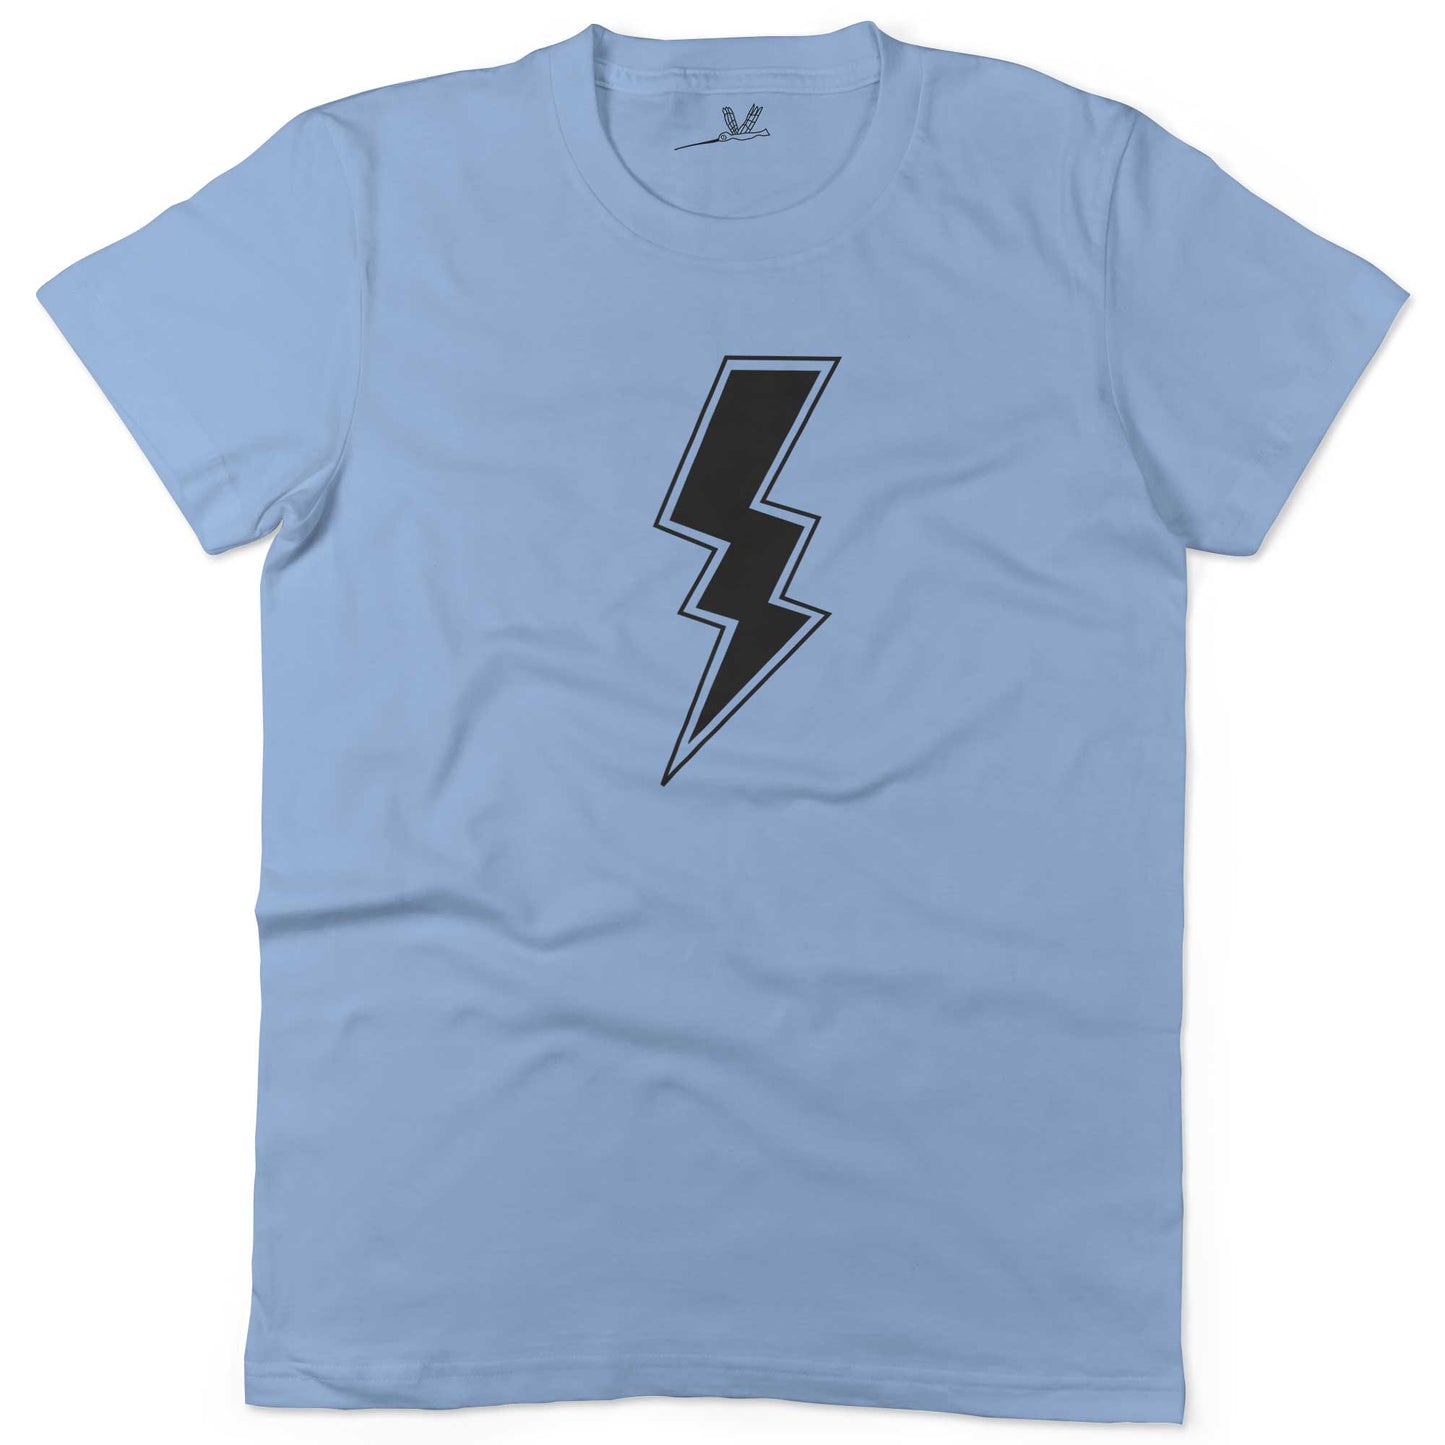 Giant Lightning Bolt Unisex Or Women's Cotton T-shirt-Baby Blue-Woman